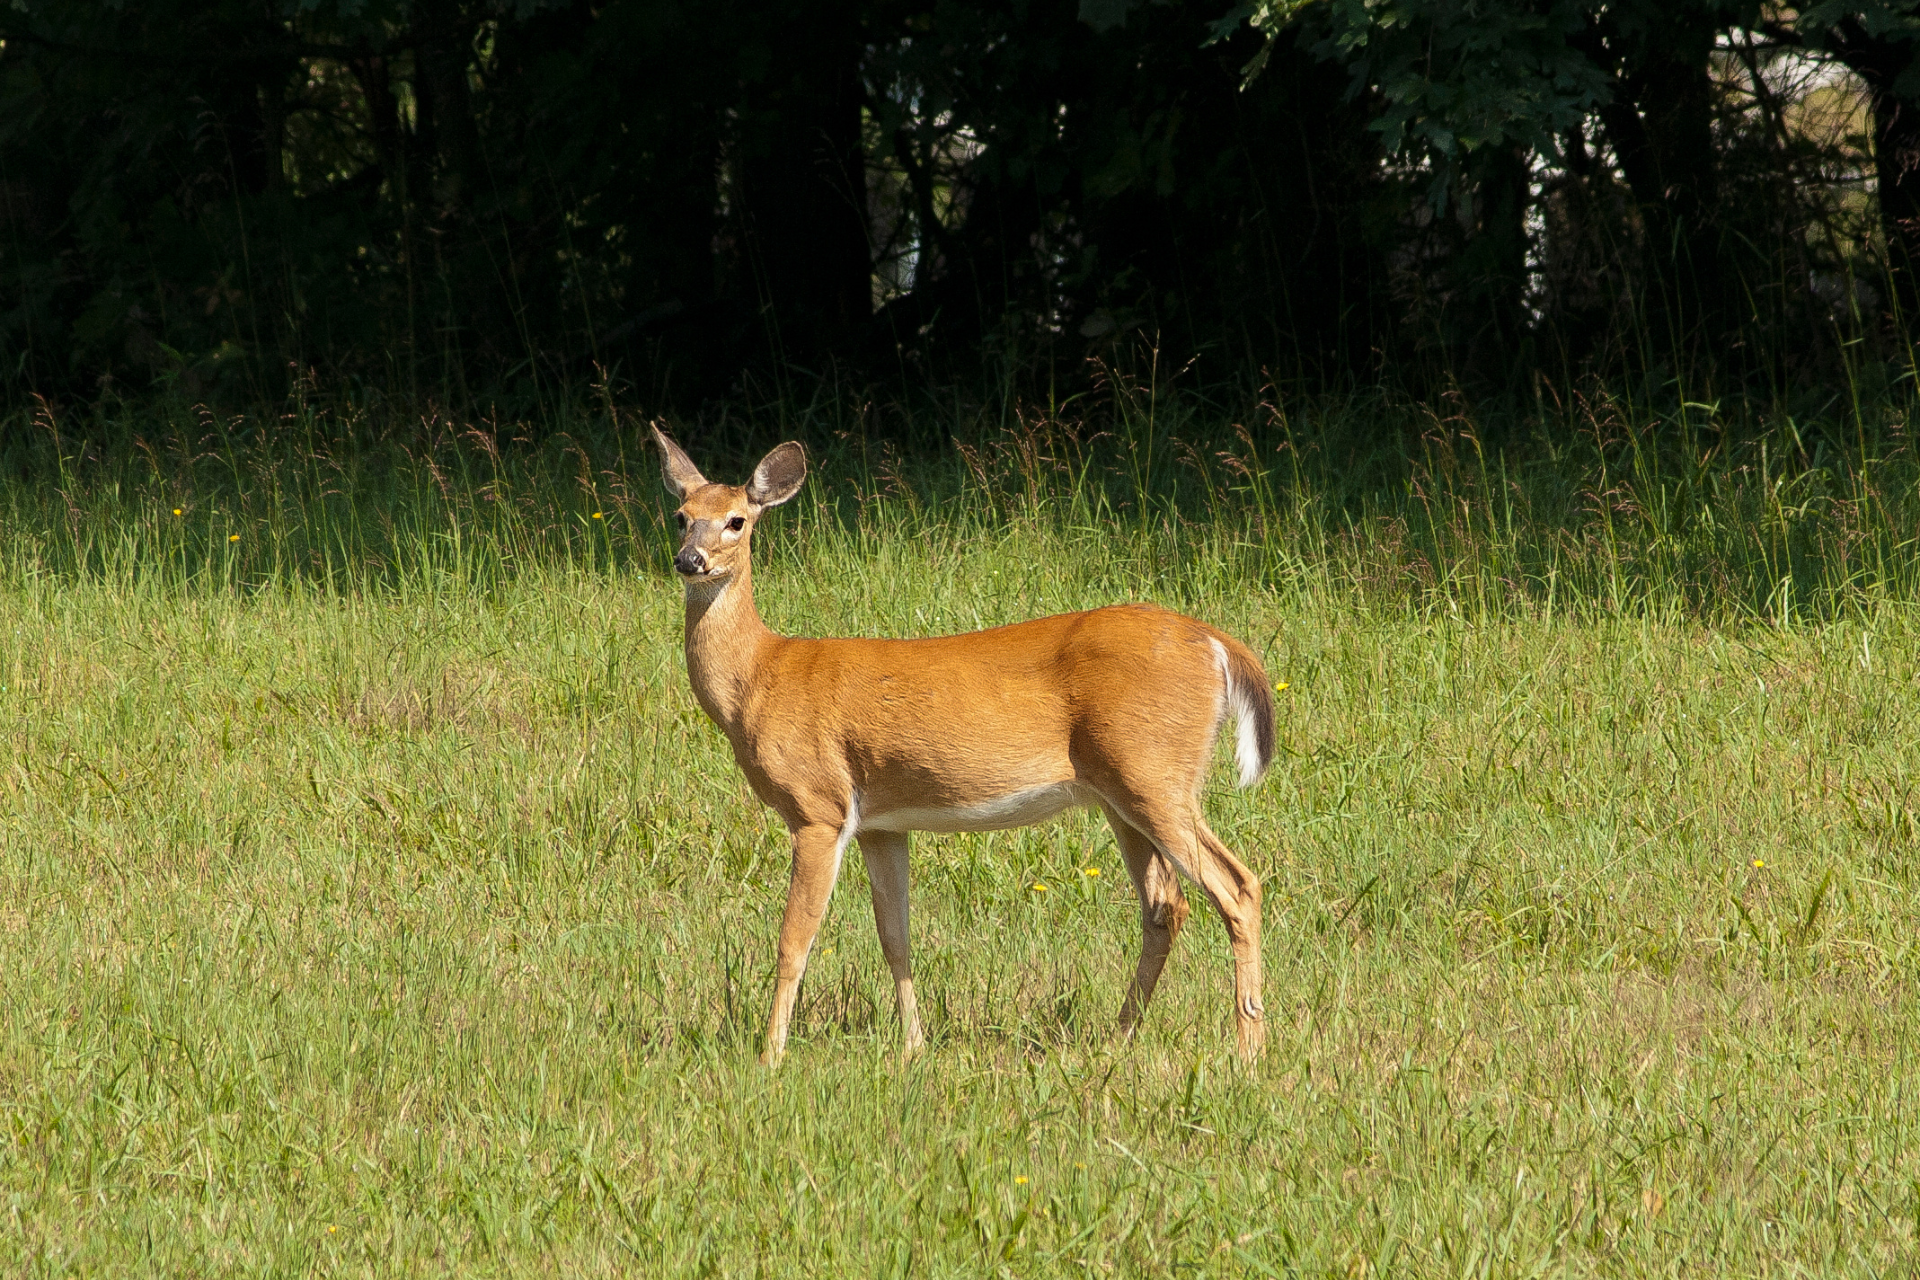 A deer is standing in a grassy field.